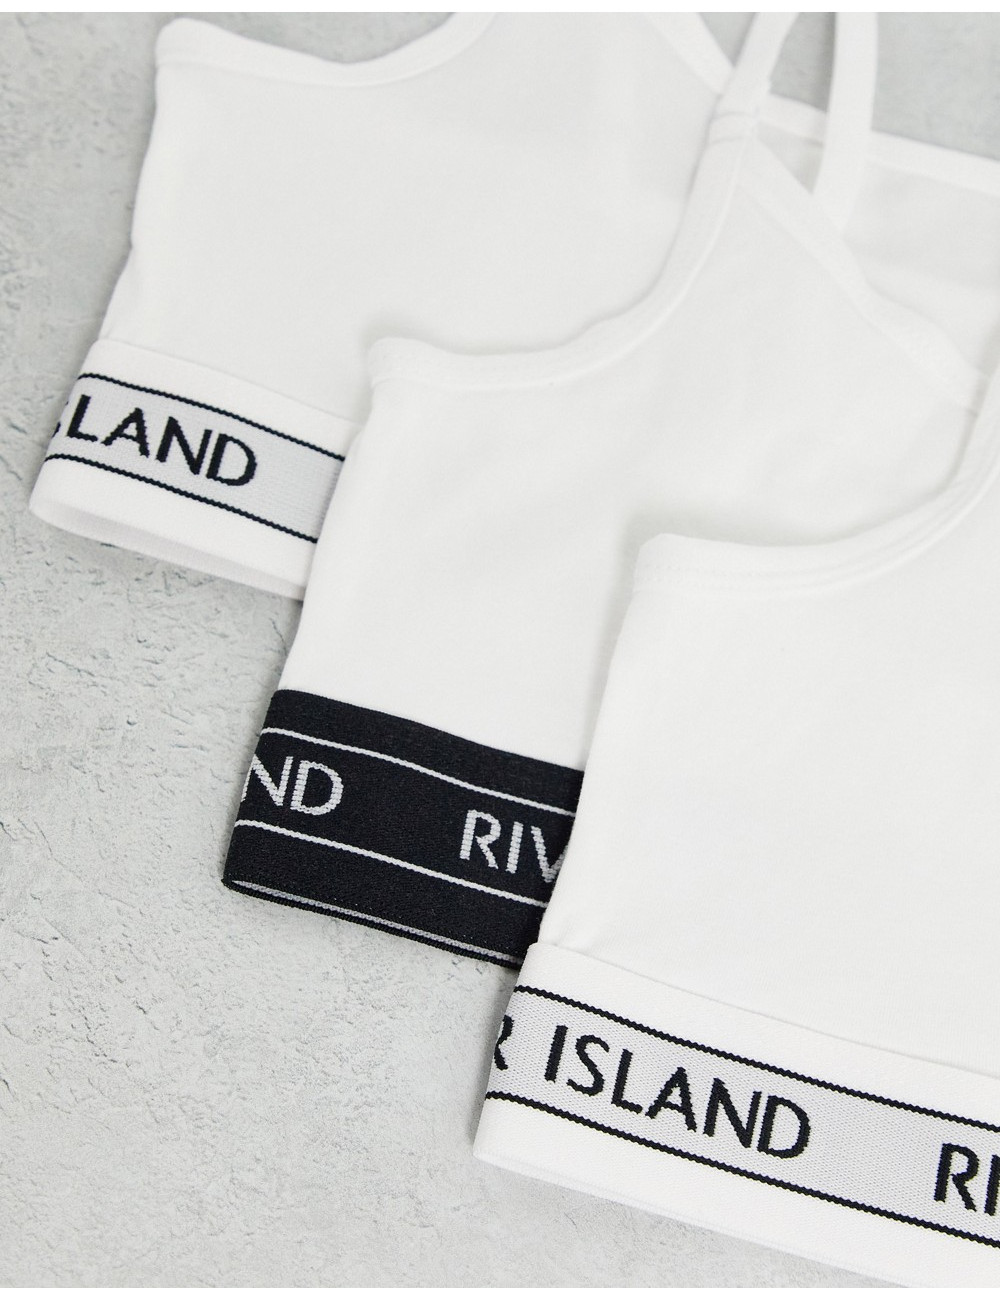 River Island logo waistband...